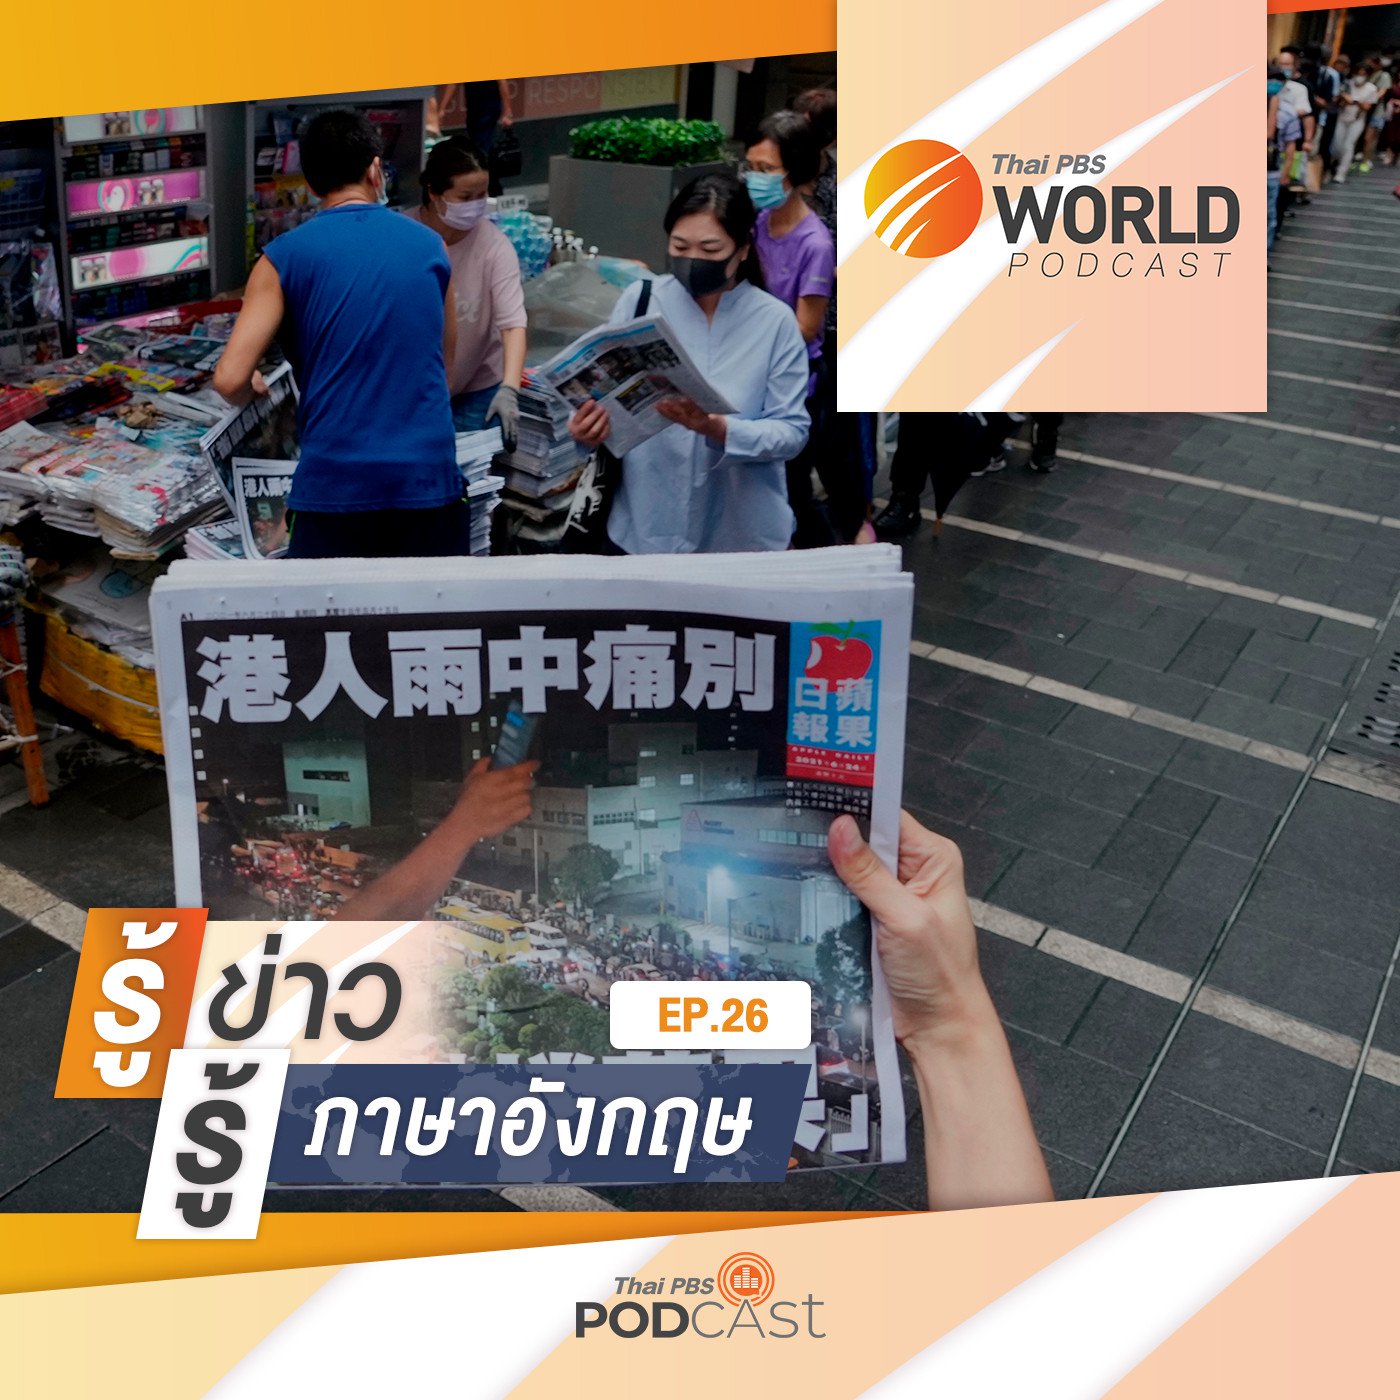 Thai PBS World Podcast - รู้ข่าว รู้ภาษาอังกฤษ EP. 26: ปิดฉาก 